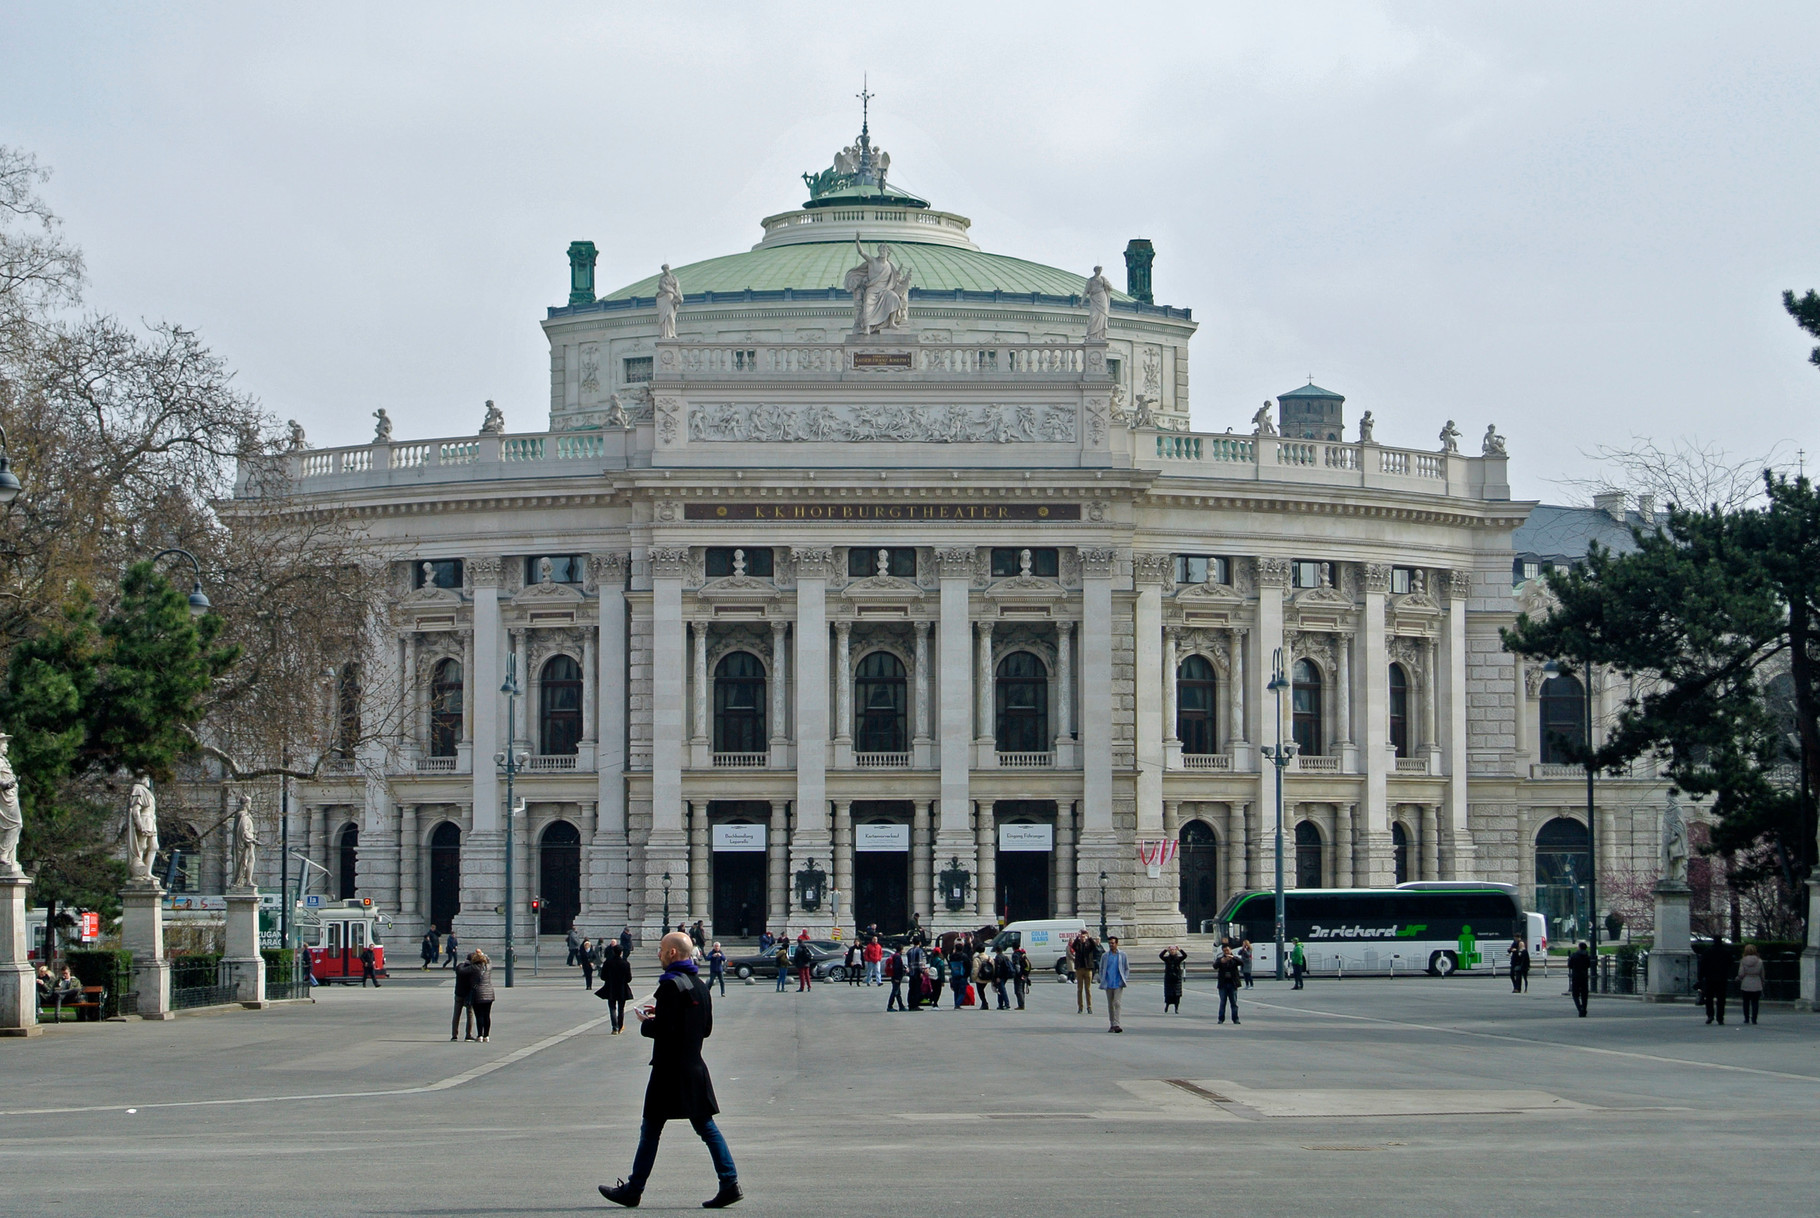 das Burgtheater